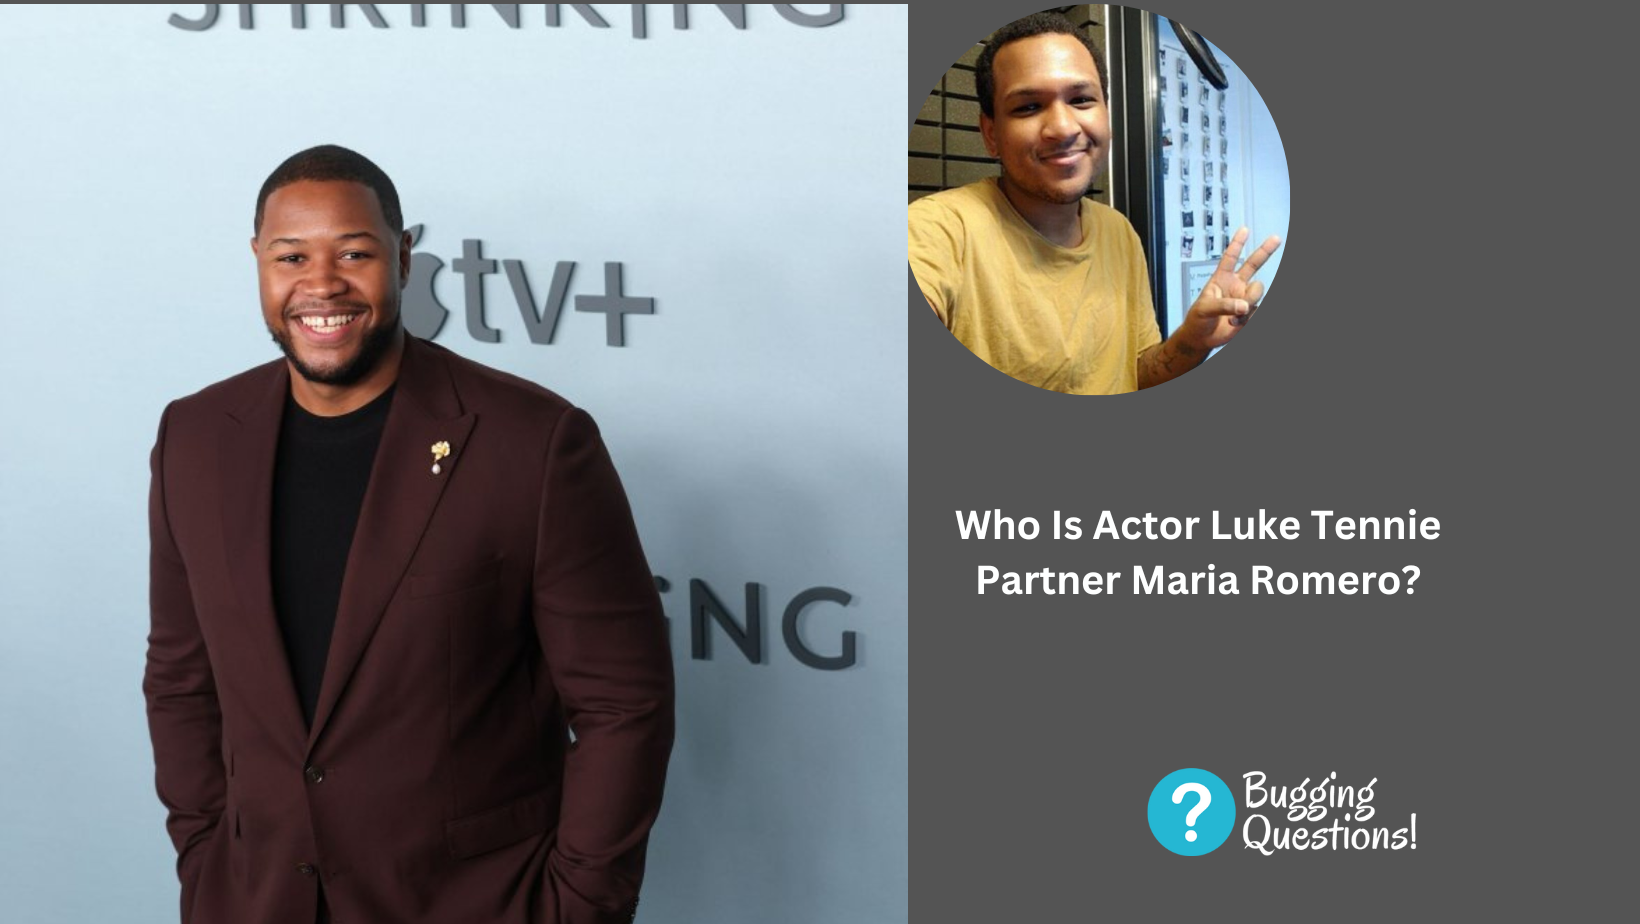 Who Is Actor Luke Tennie Partner Maria Romero?